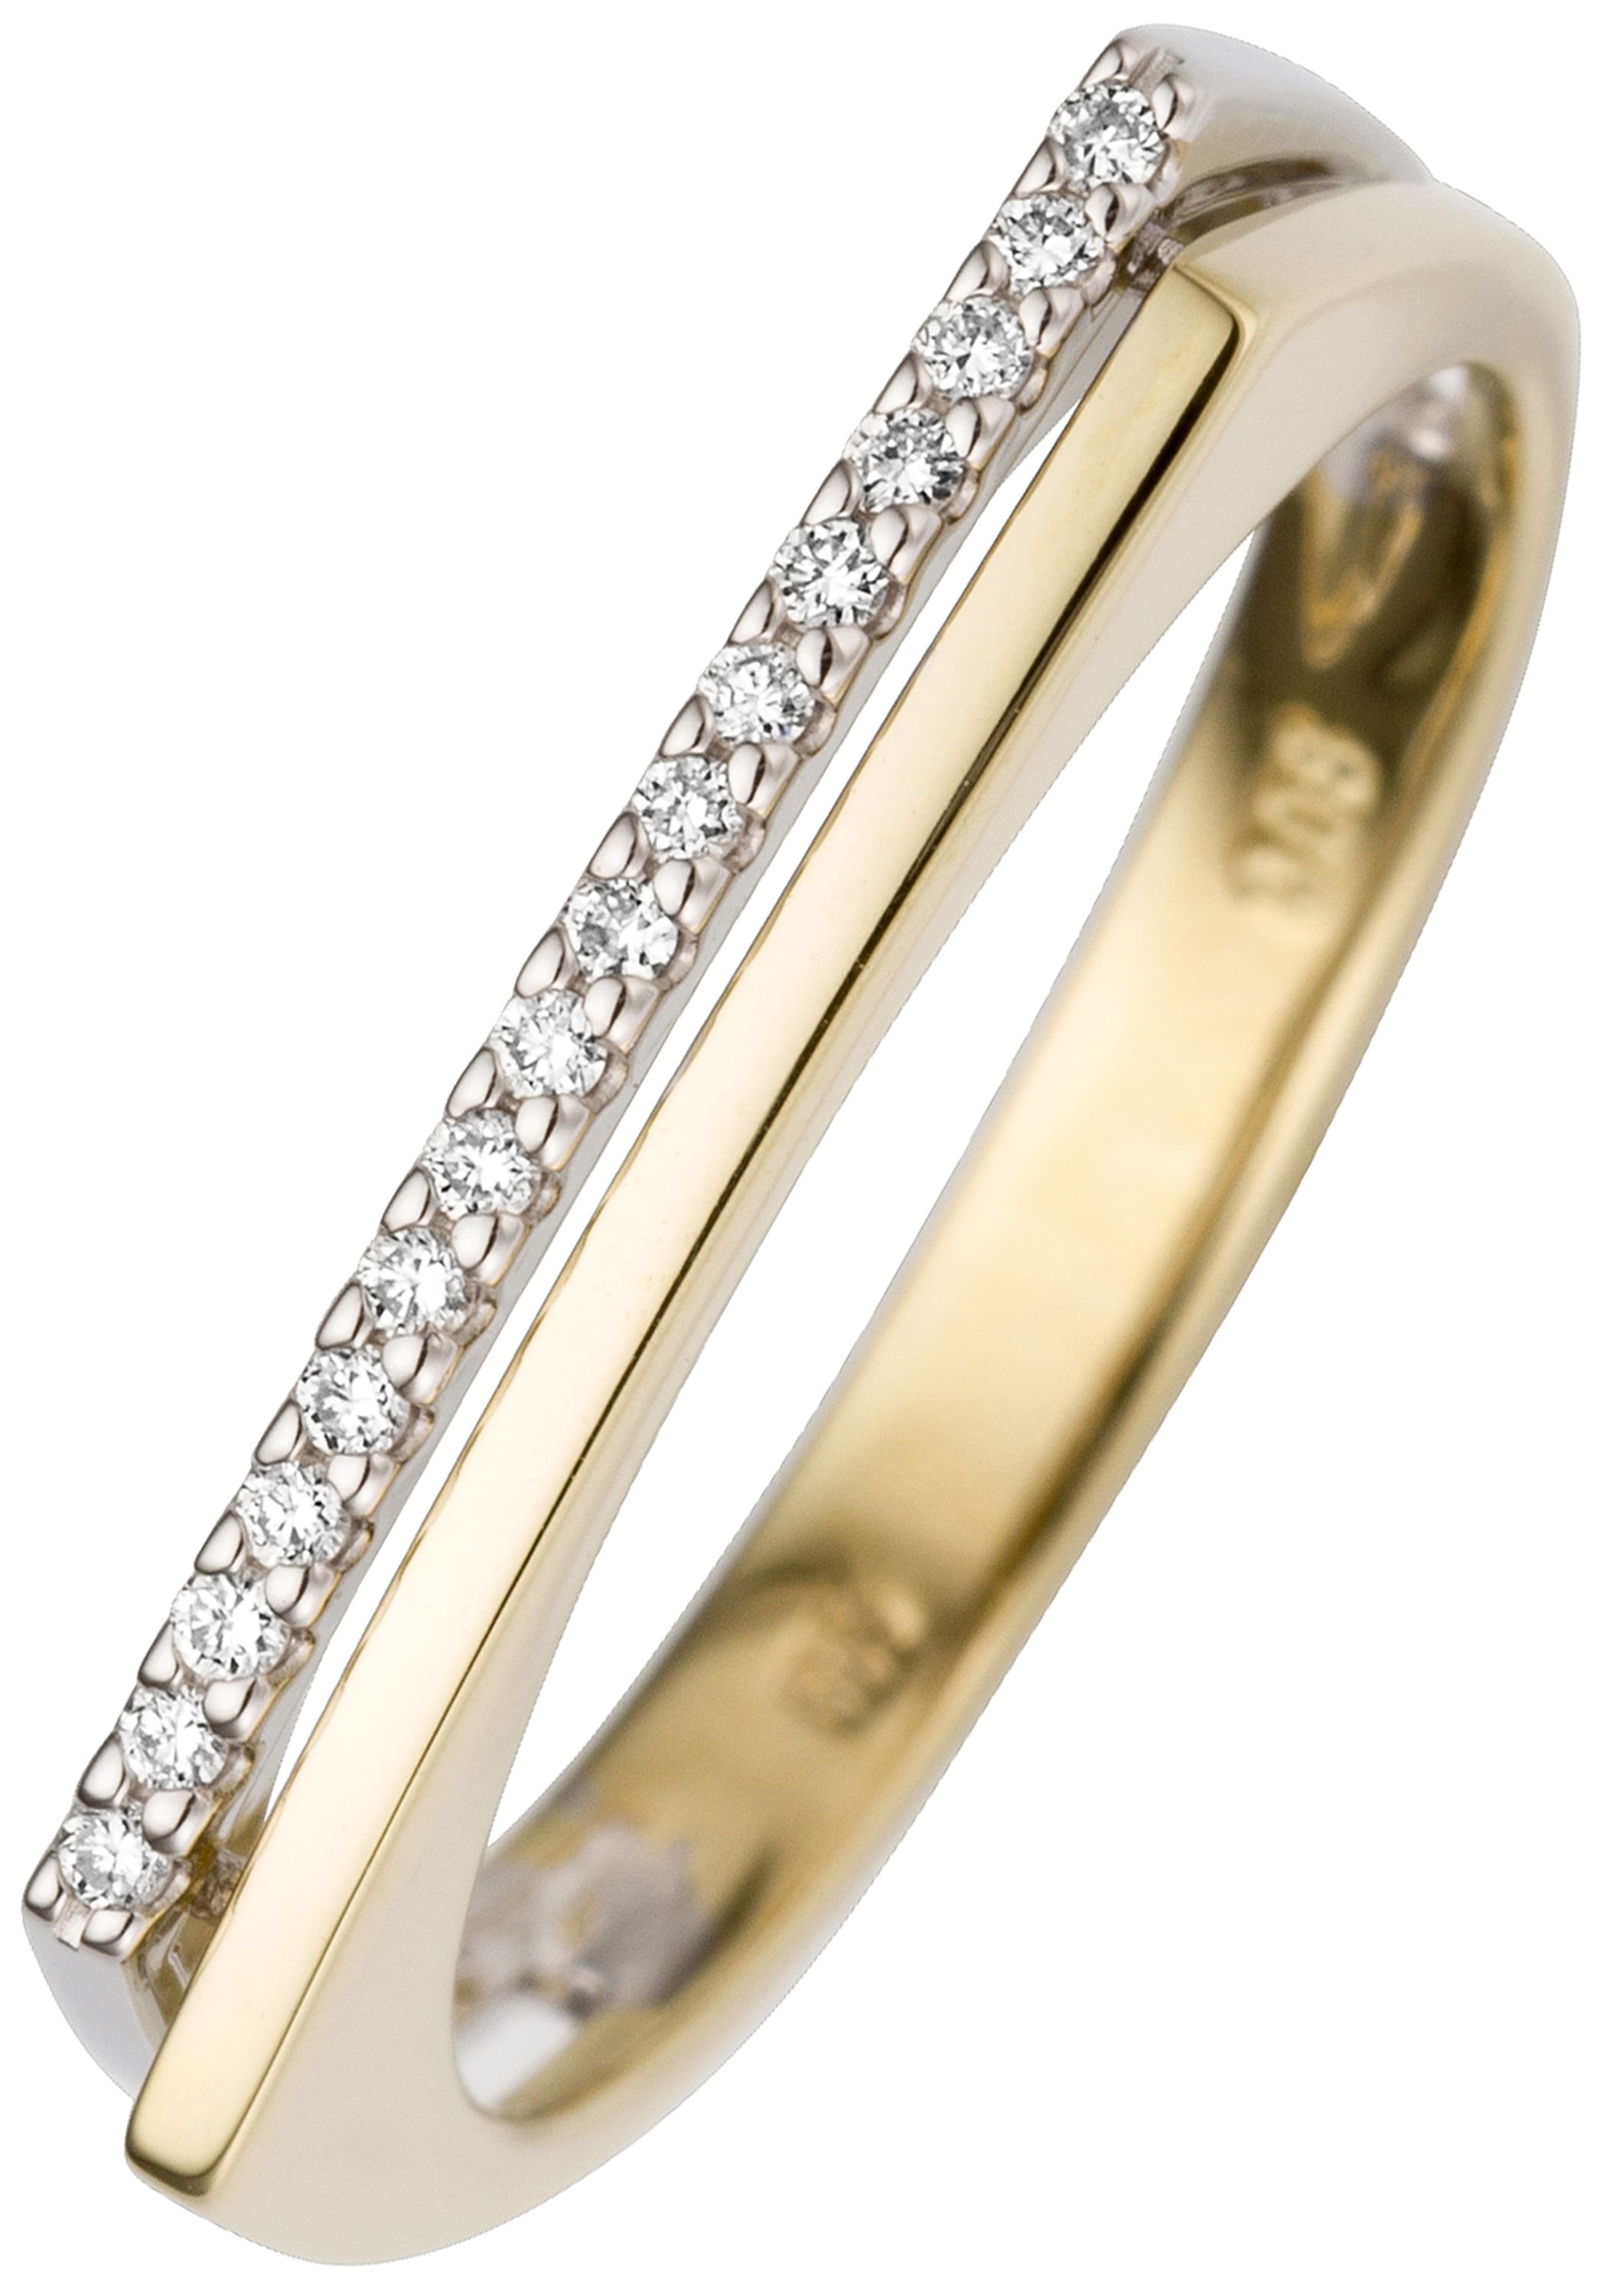 JOBO Fingerring, 585 Gold bicolor mit 16 Diamanten kaufen | BAUR